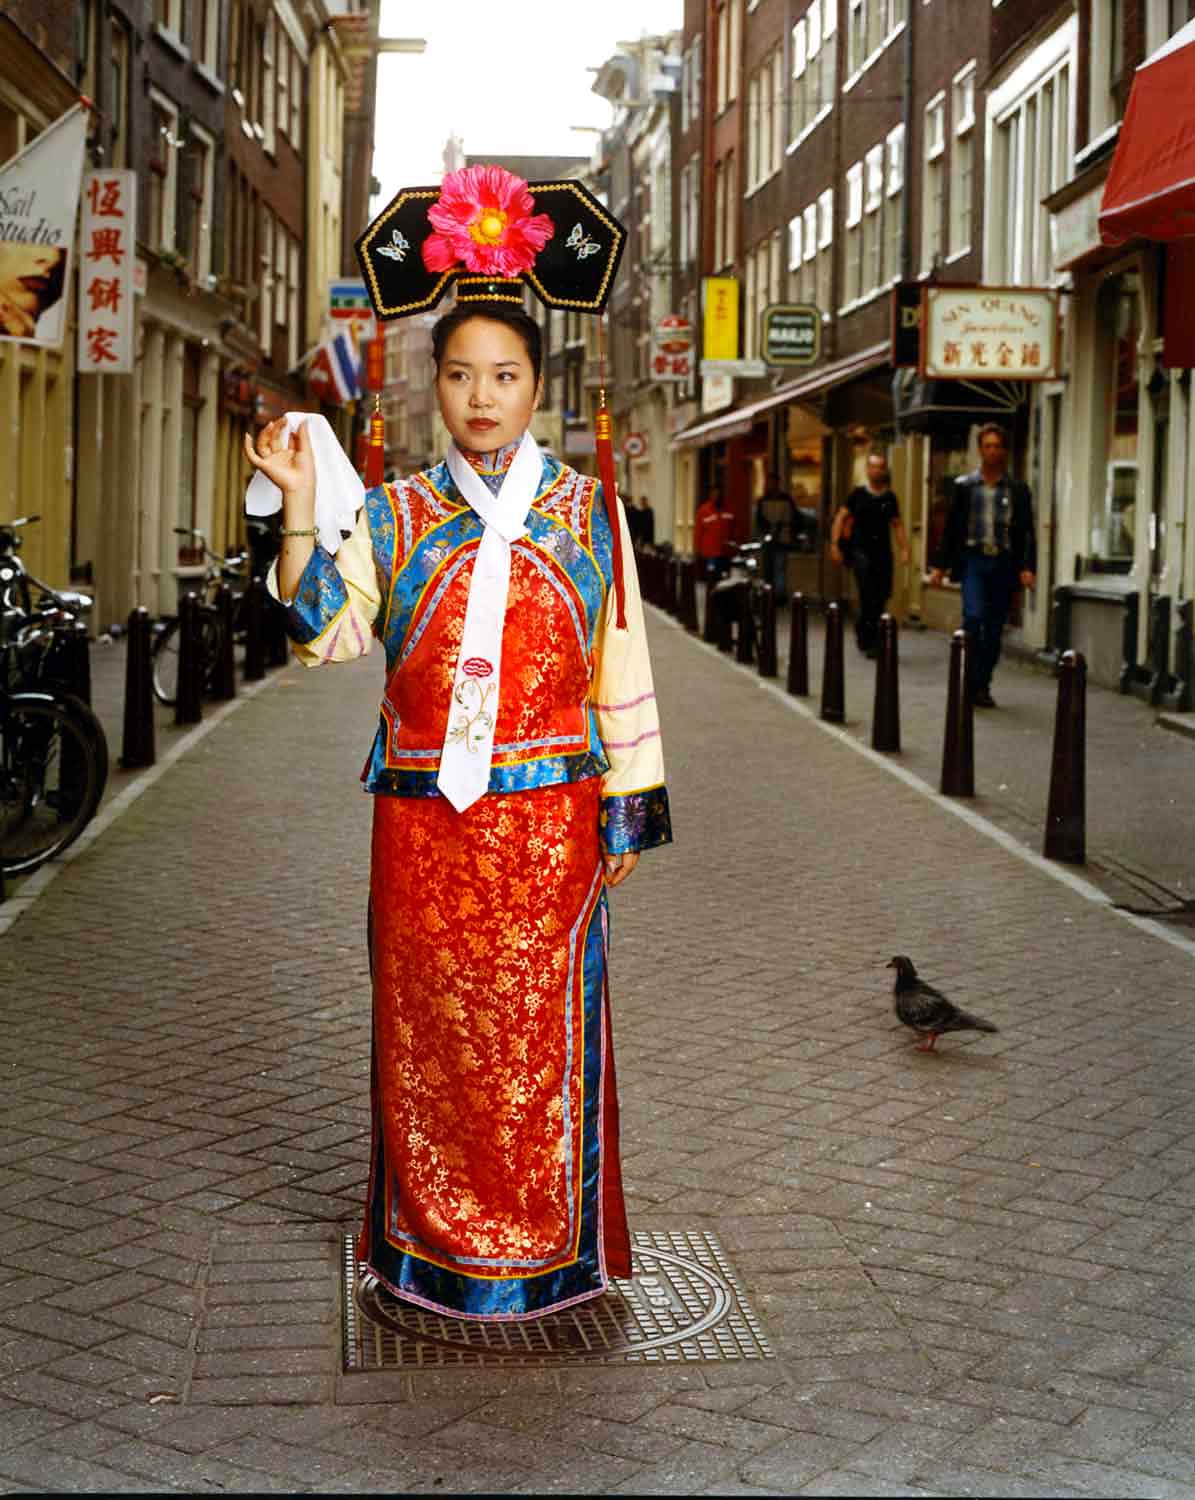 China town Amsterdam/Stadsarchief Amsterdam